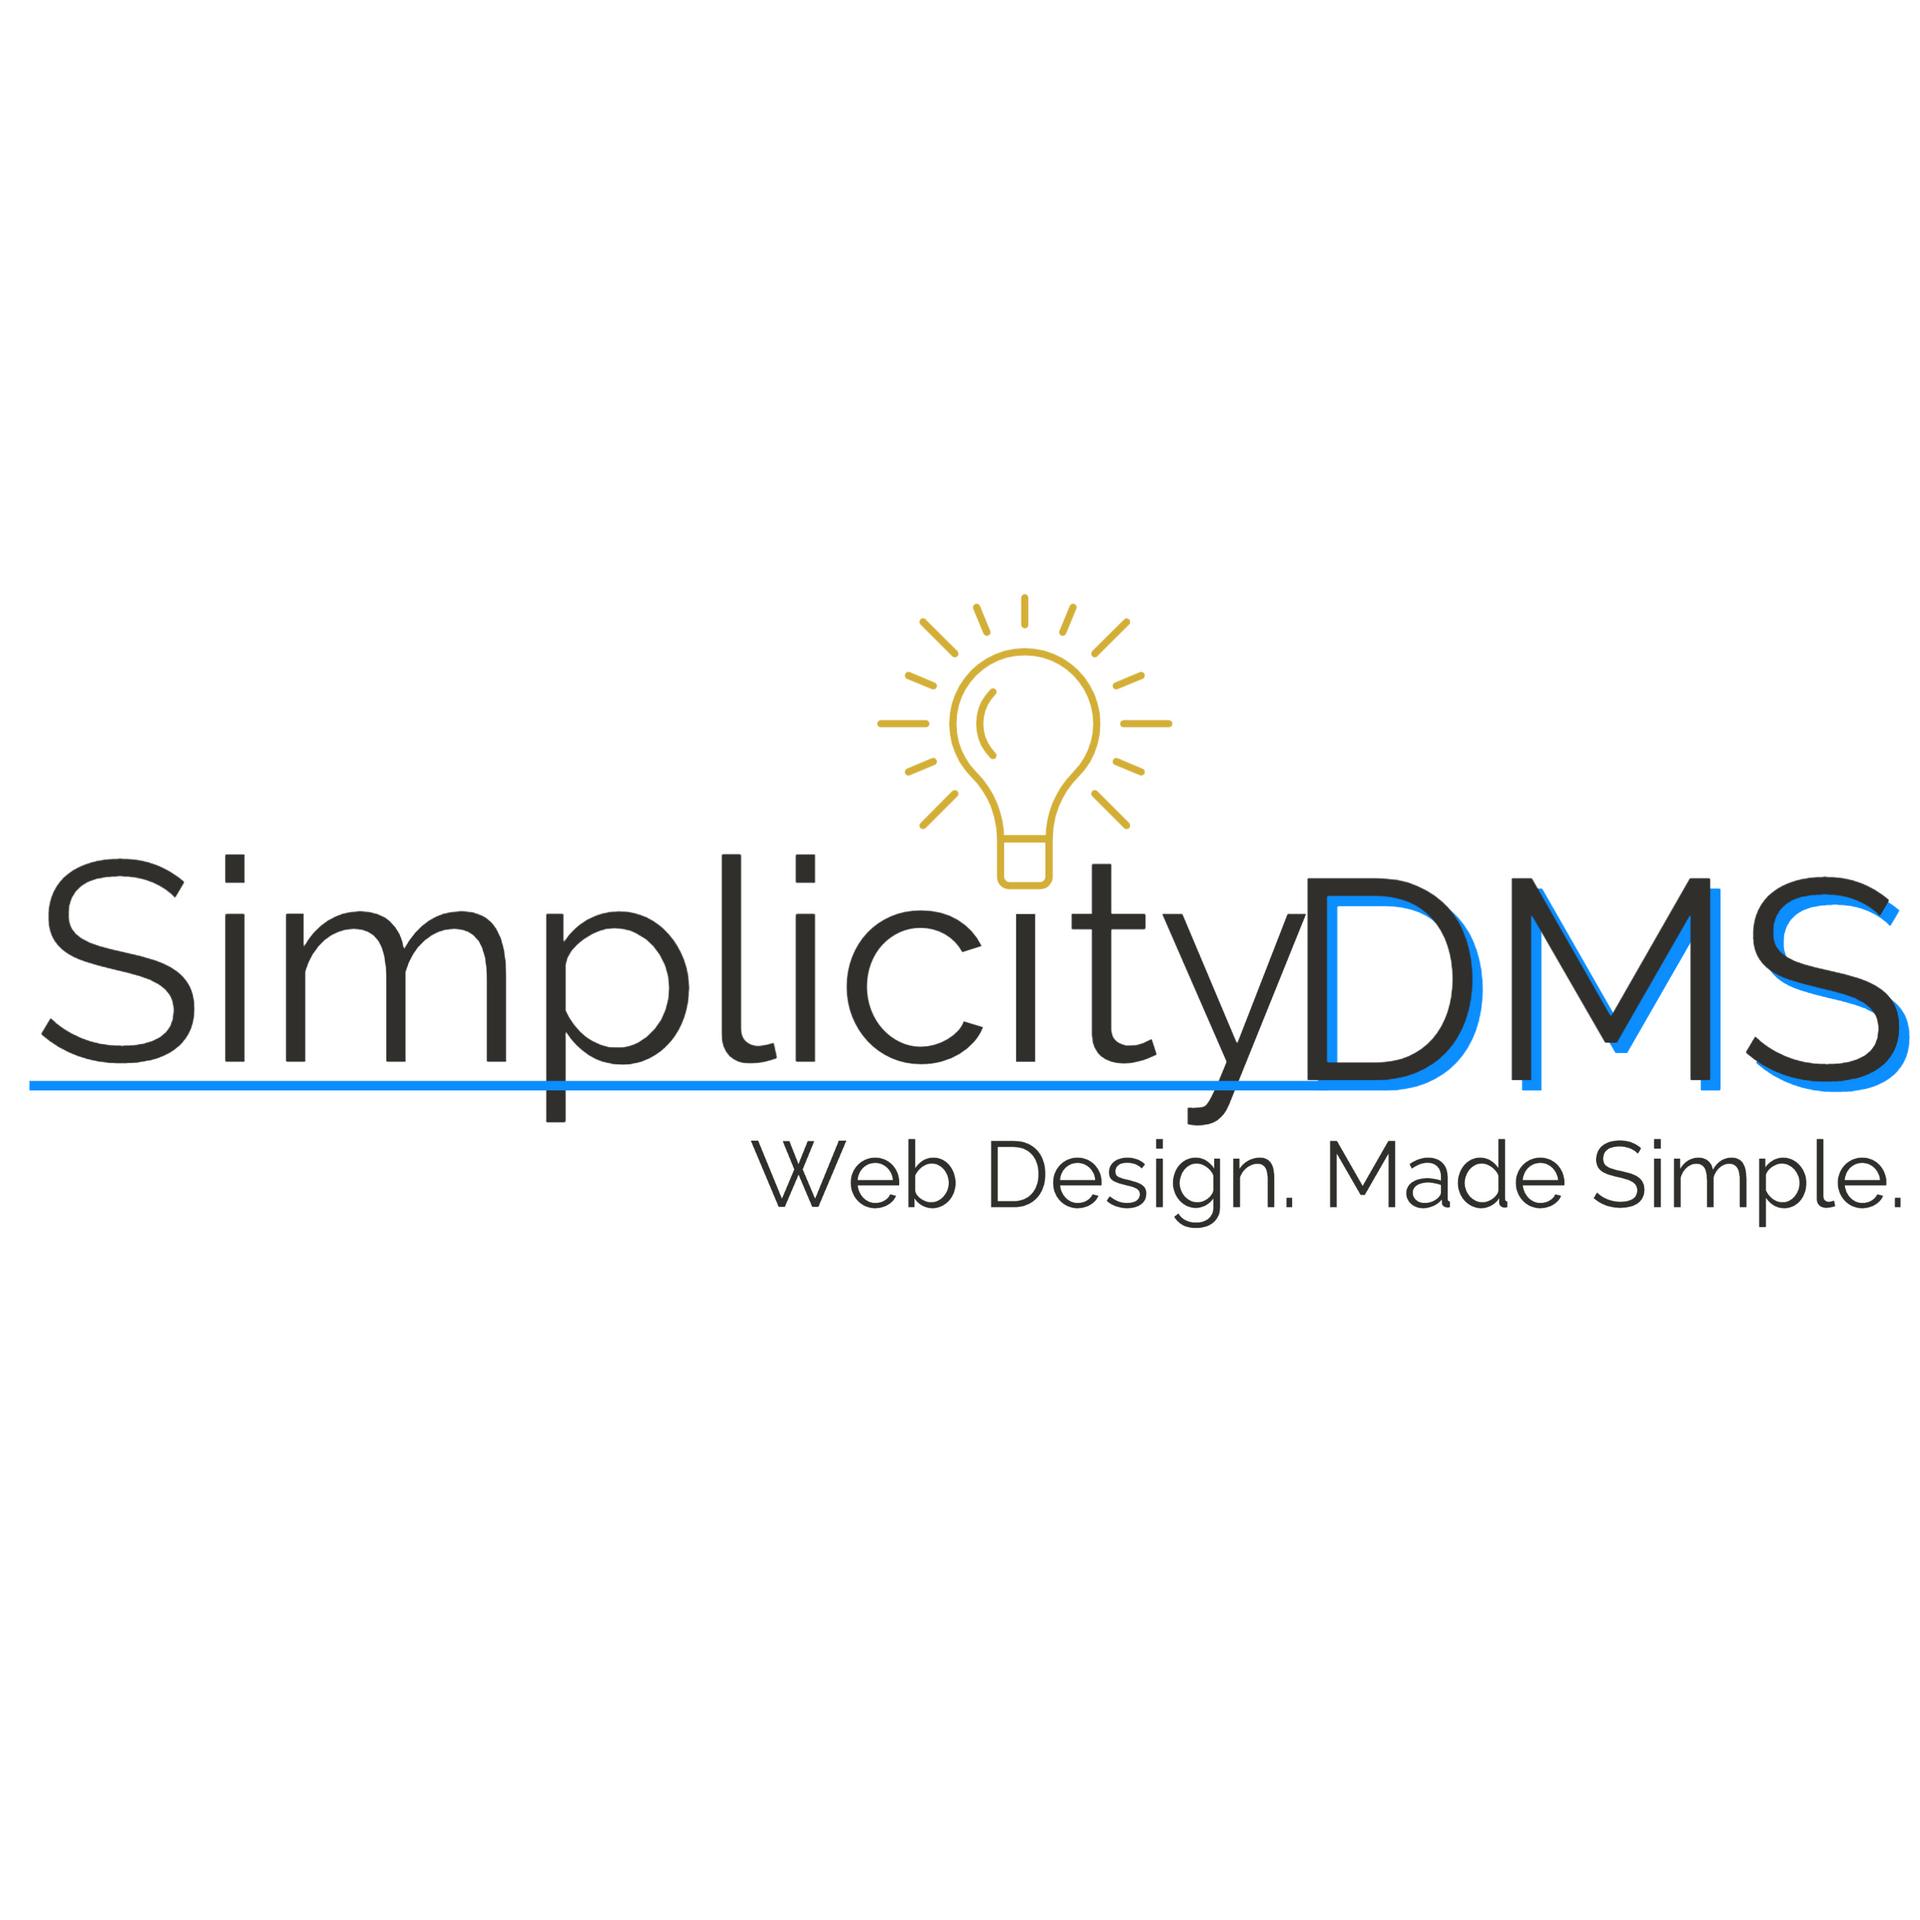 Image of SimplicityDMS logo